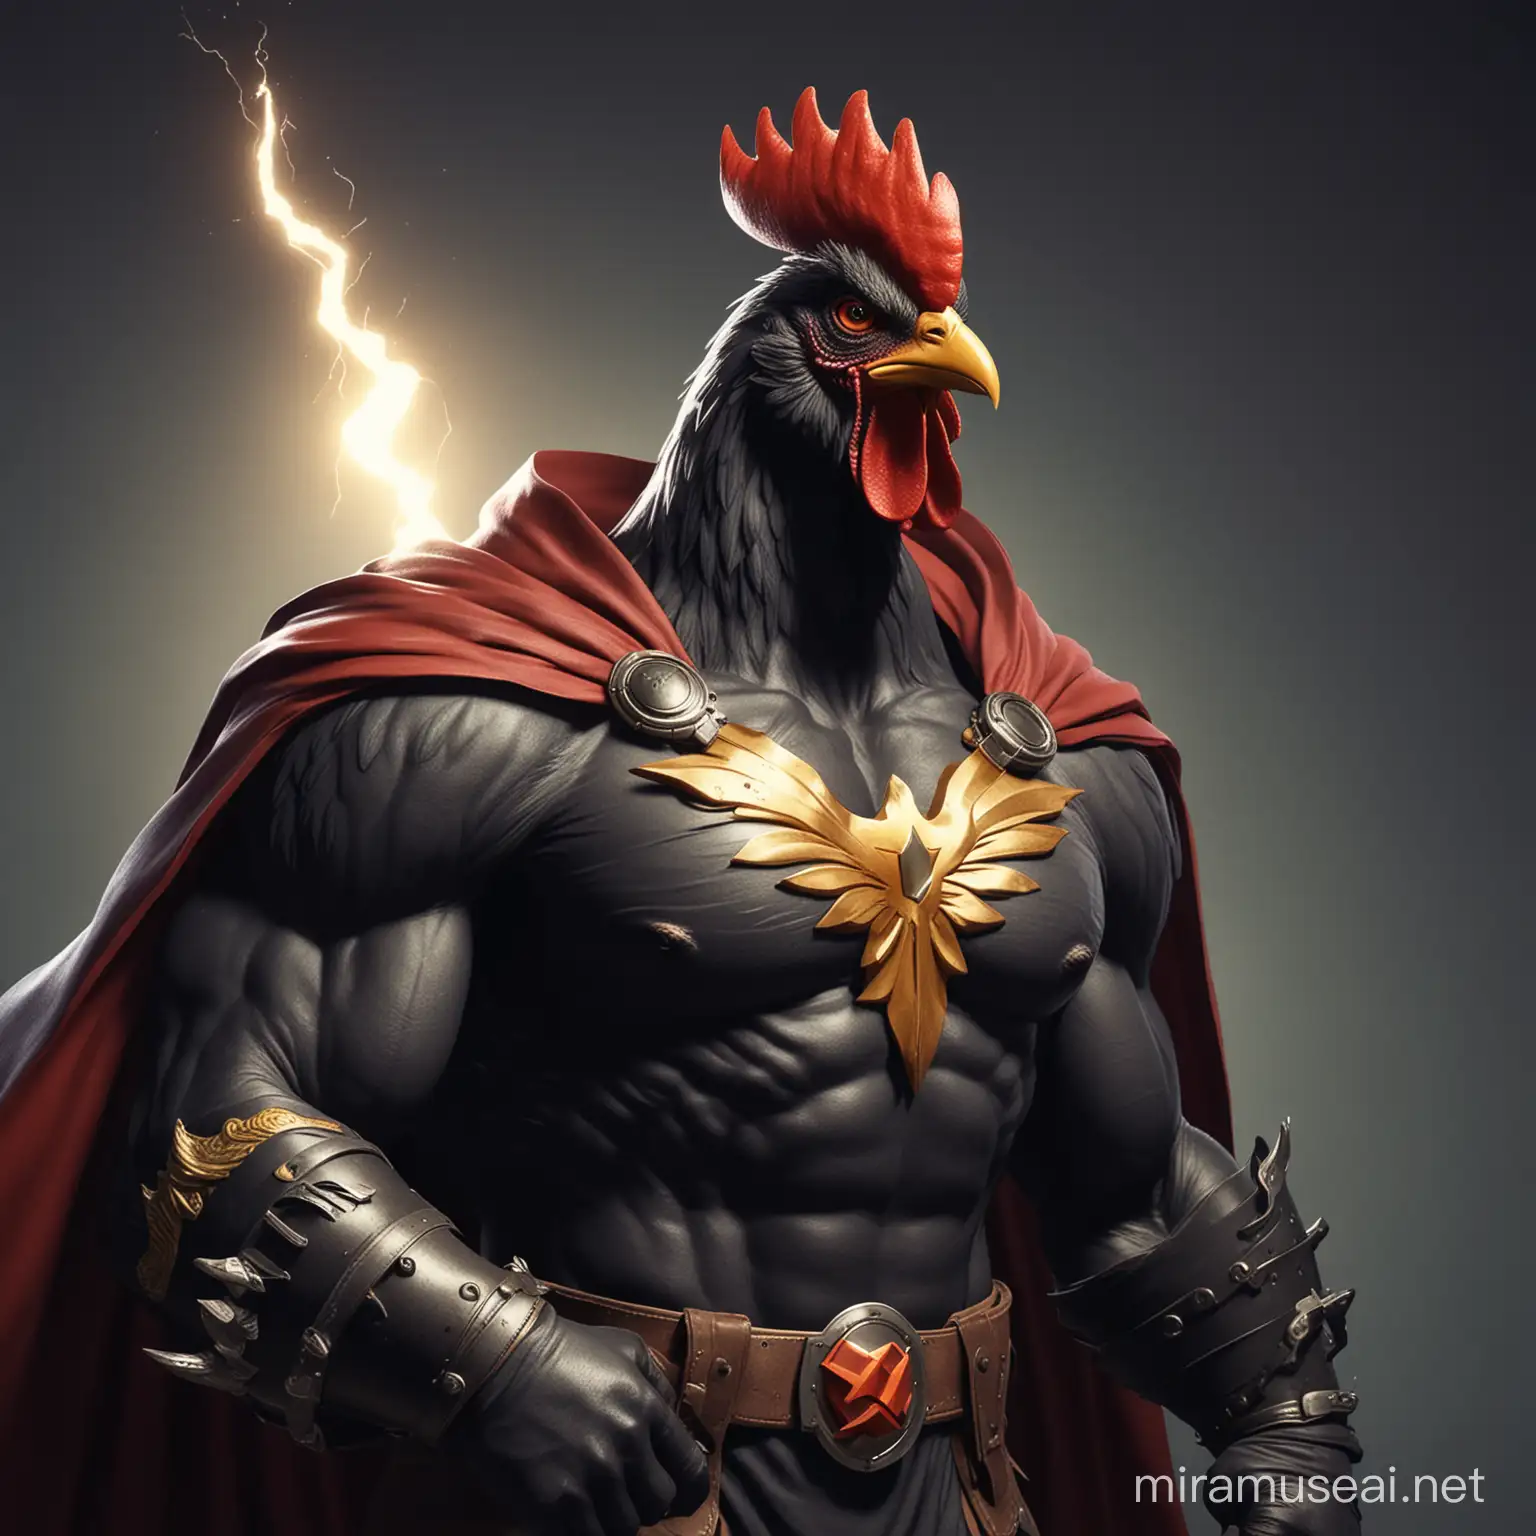 dark, an adult cartoon character, a giant rooster, lighting bolt emblem on chest, cape, mask, crimefighter